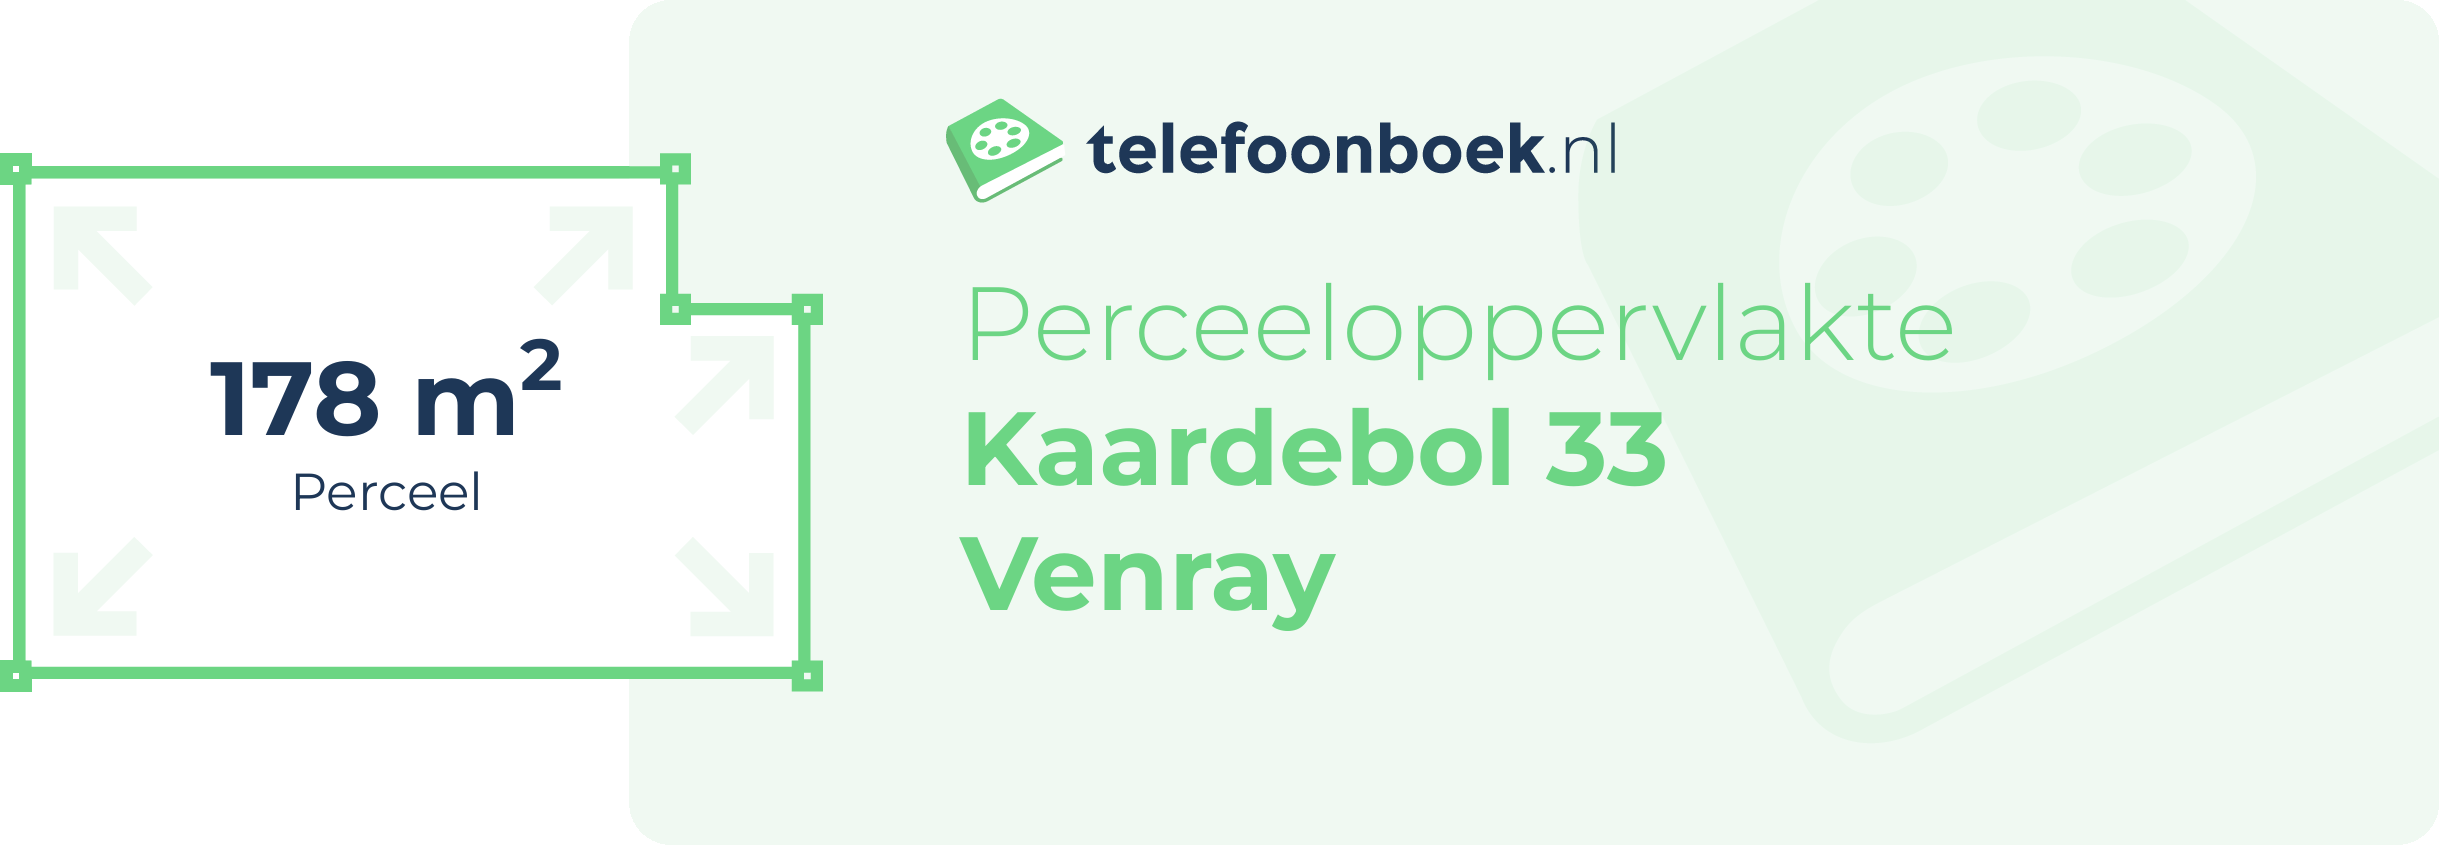 Perceeloppervlakte Kaardebol 33 Venray